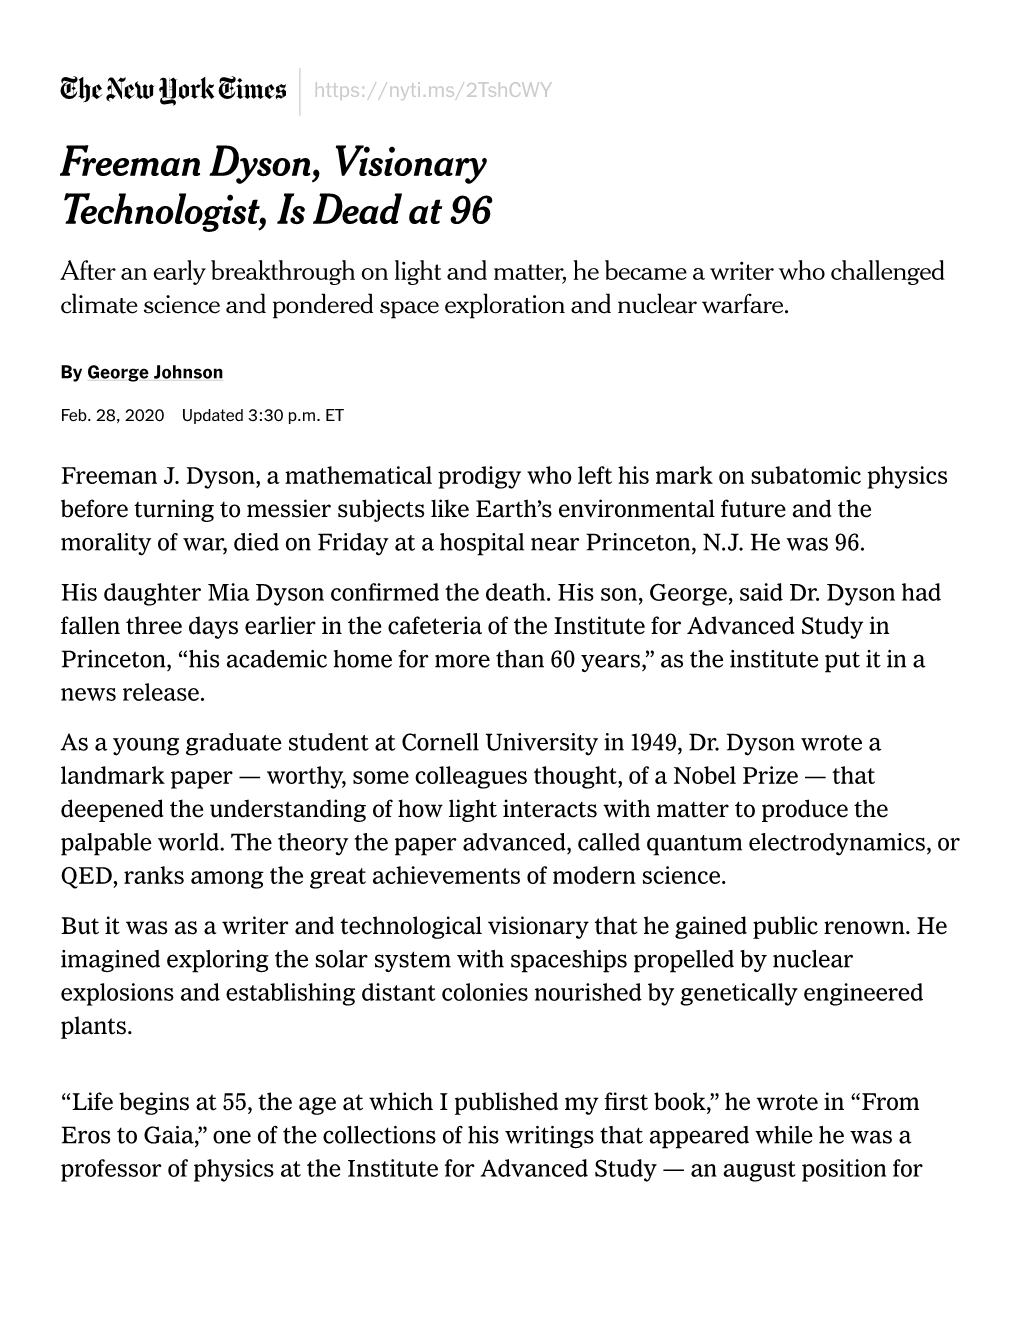 Freeman Dyson, Visionary Technologist, Is Dead